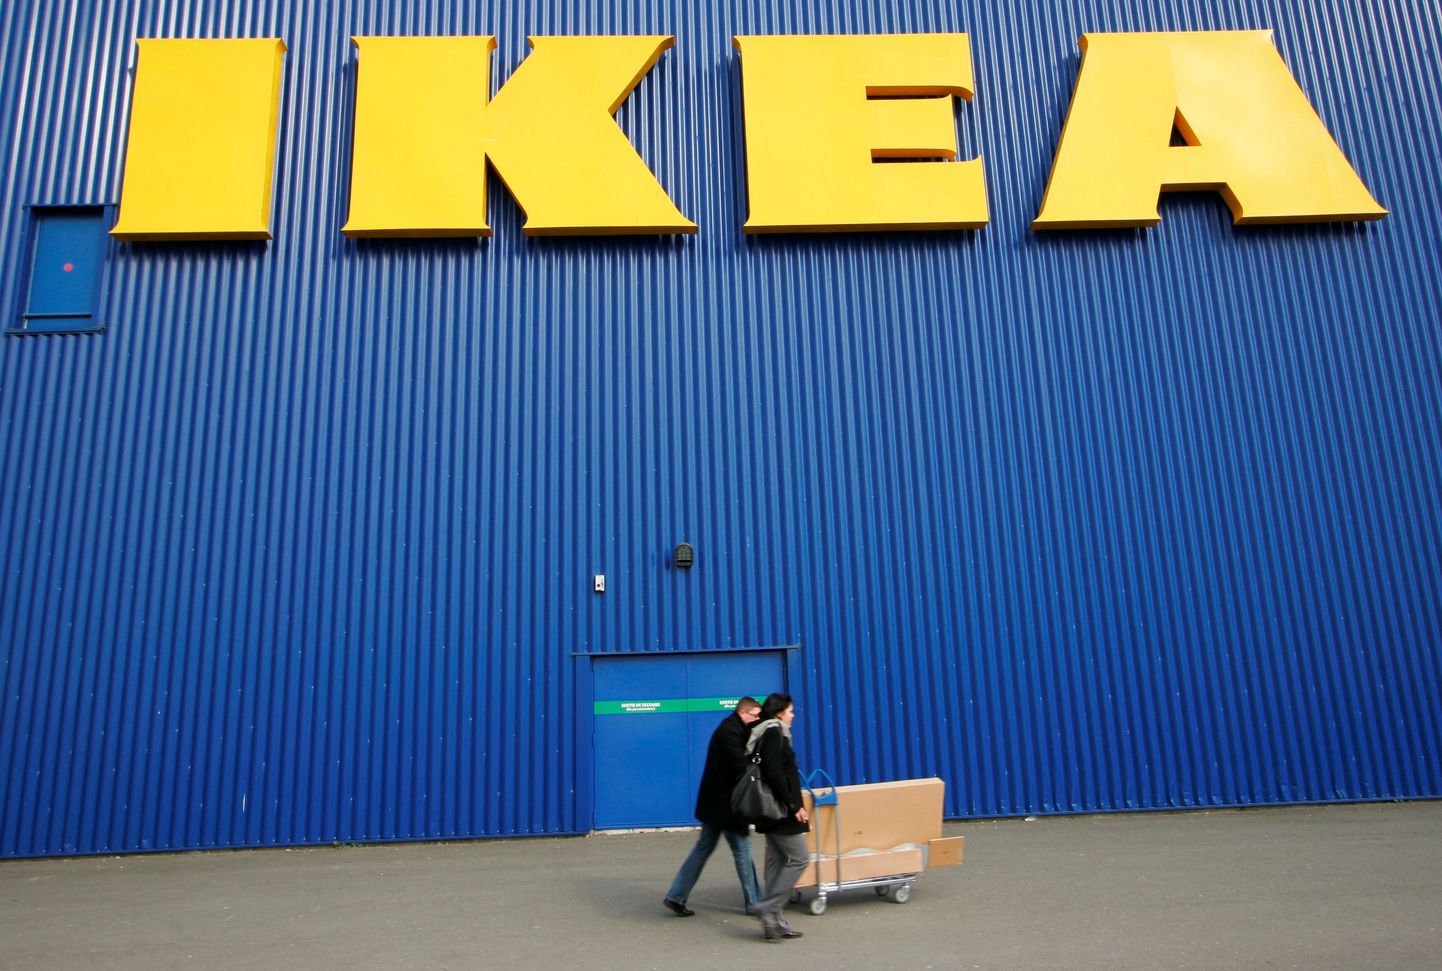 Ikea.